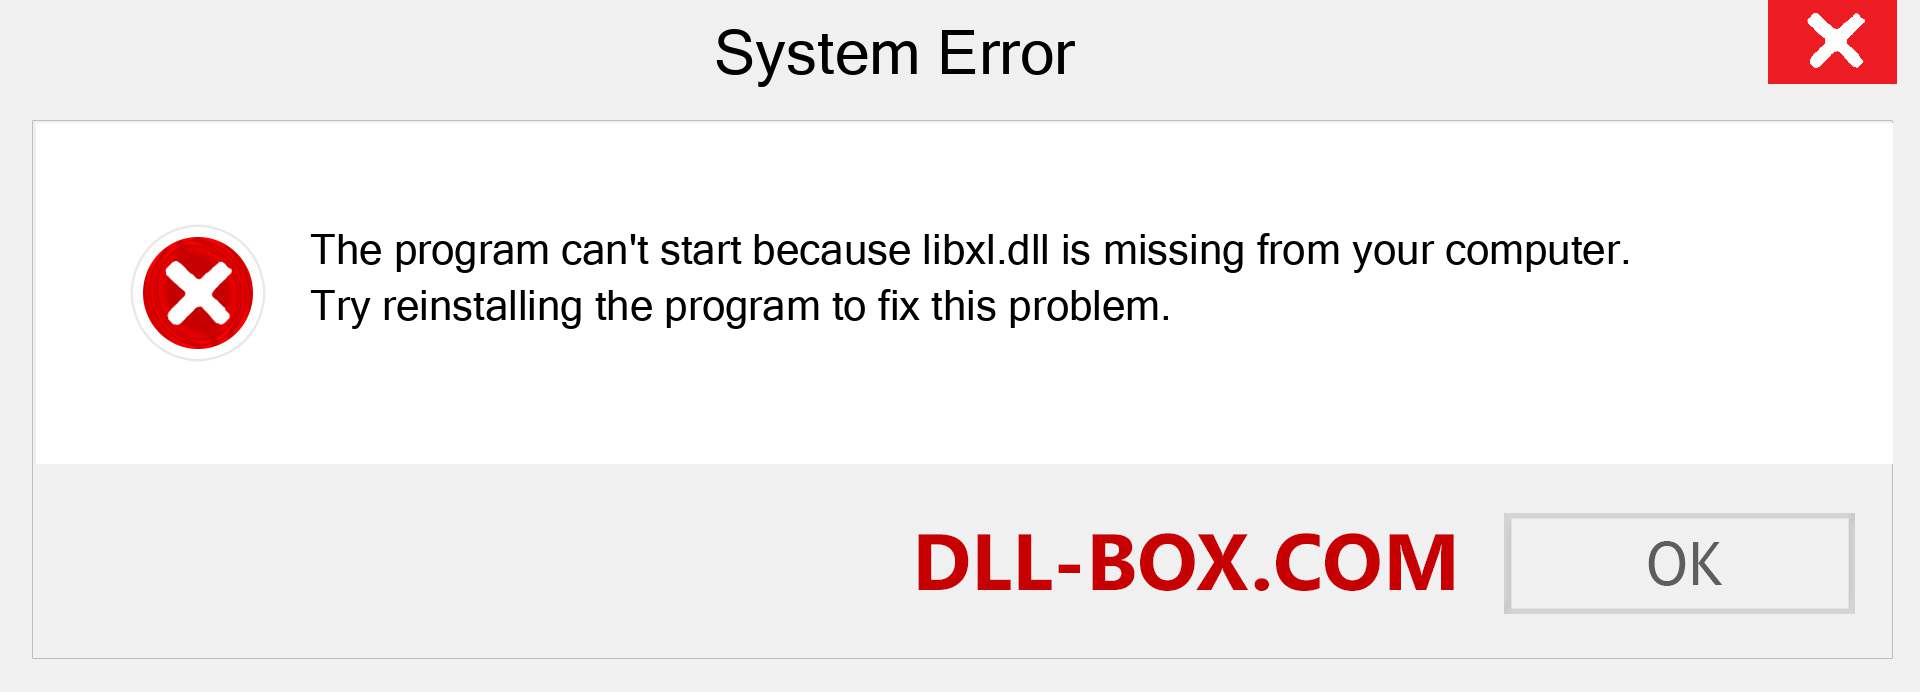  libxl.dll file is missing?. Download for Windows 7, 8, 10 - Fix  libxl dll Missing Error on Windows, photos, images